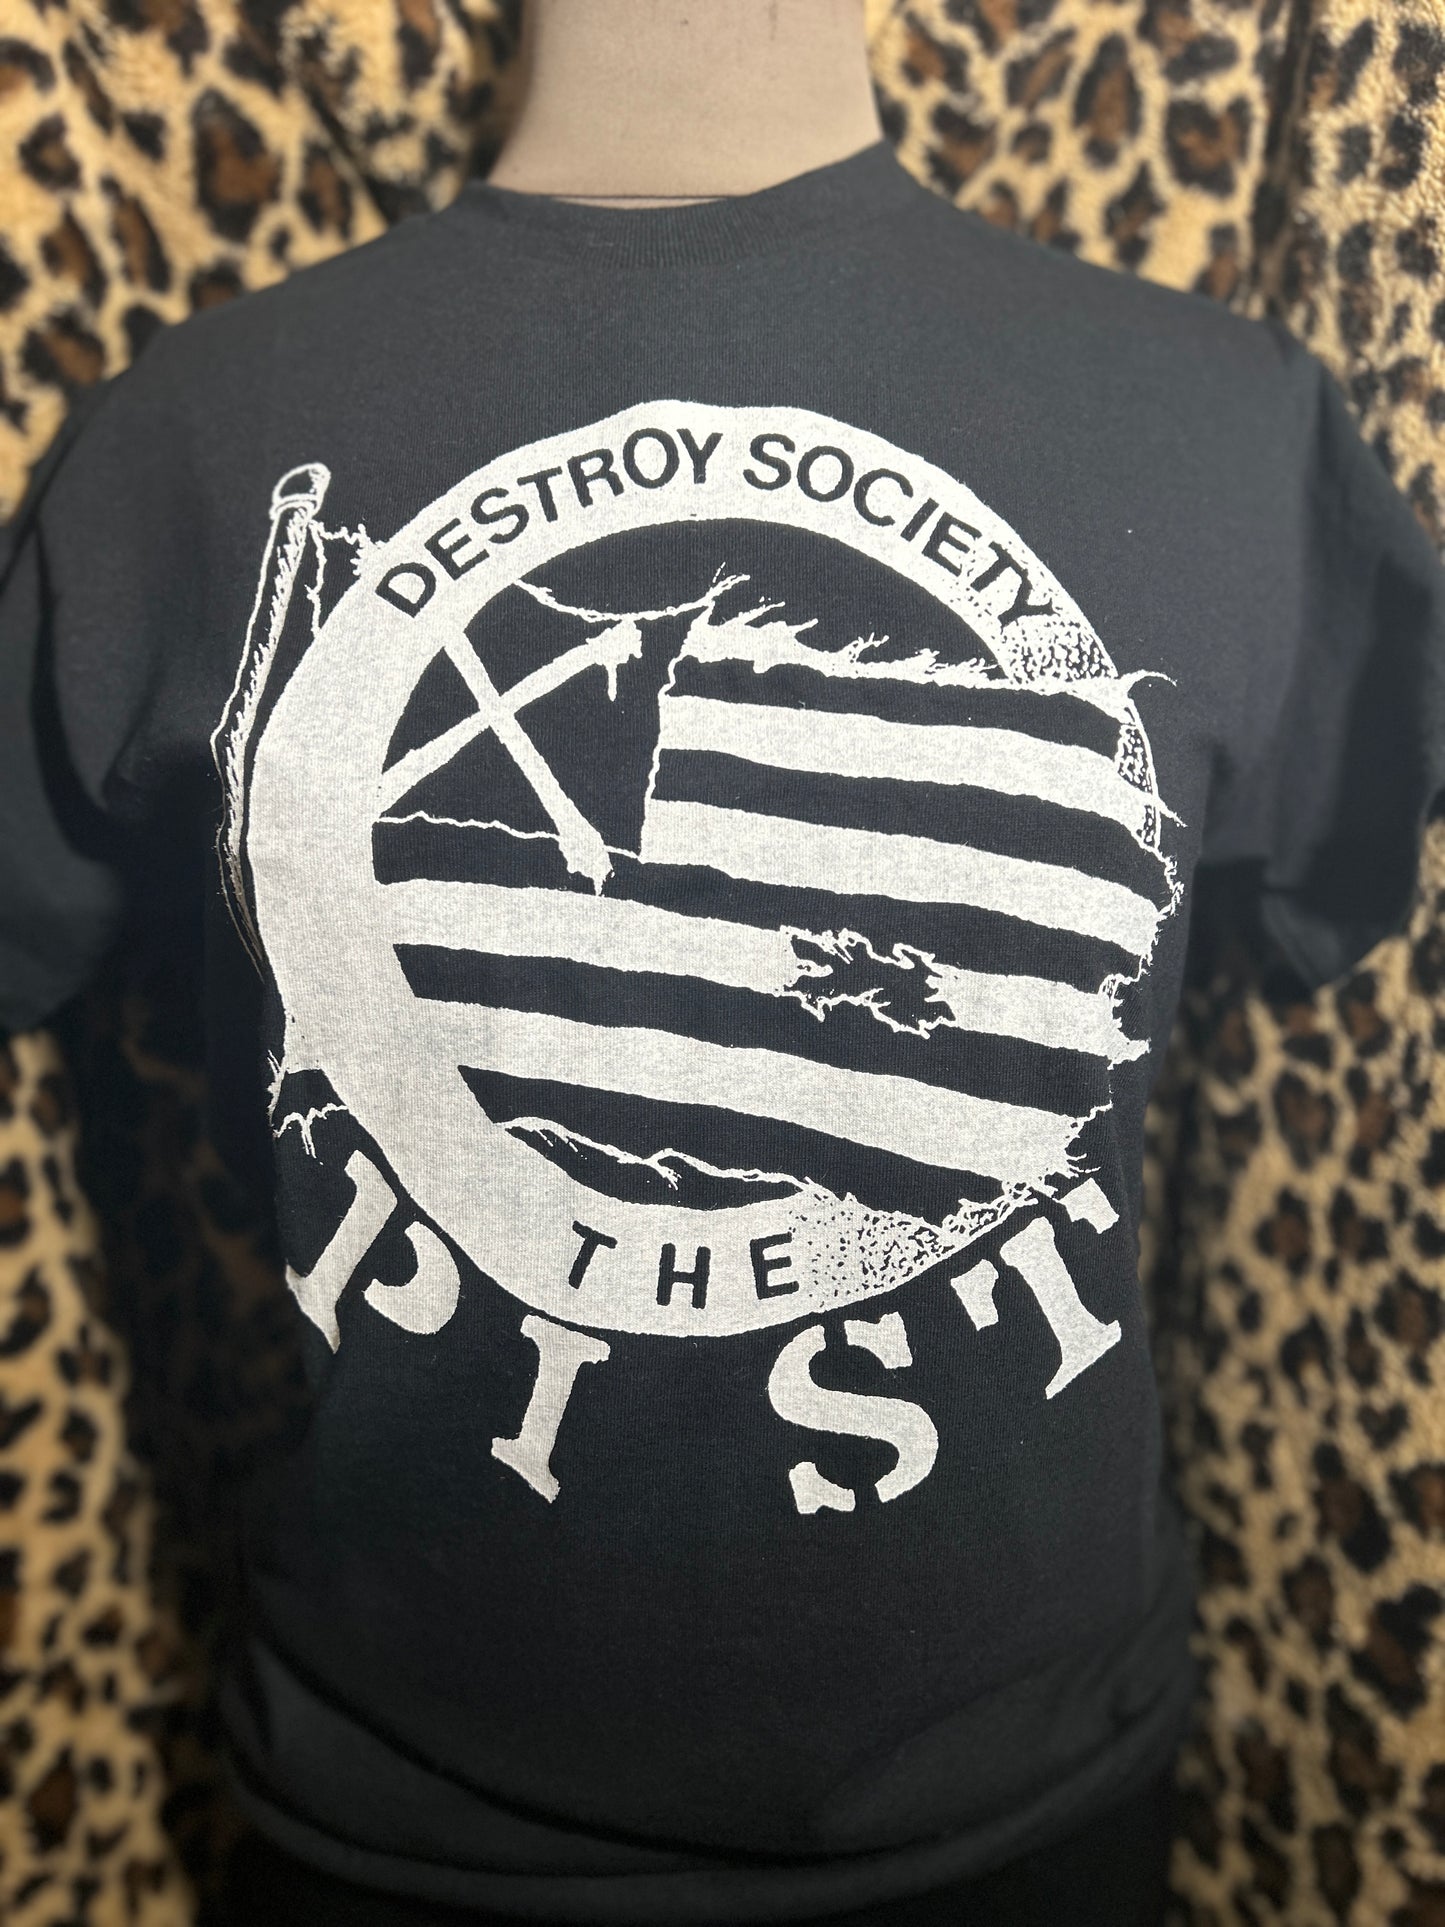 The PIST “Destroy Society” Tee